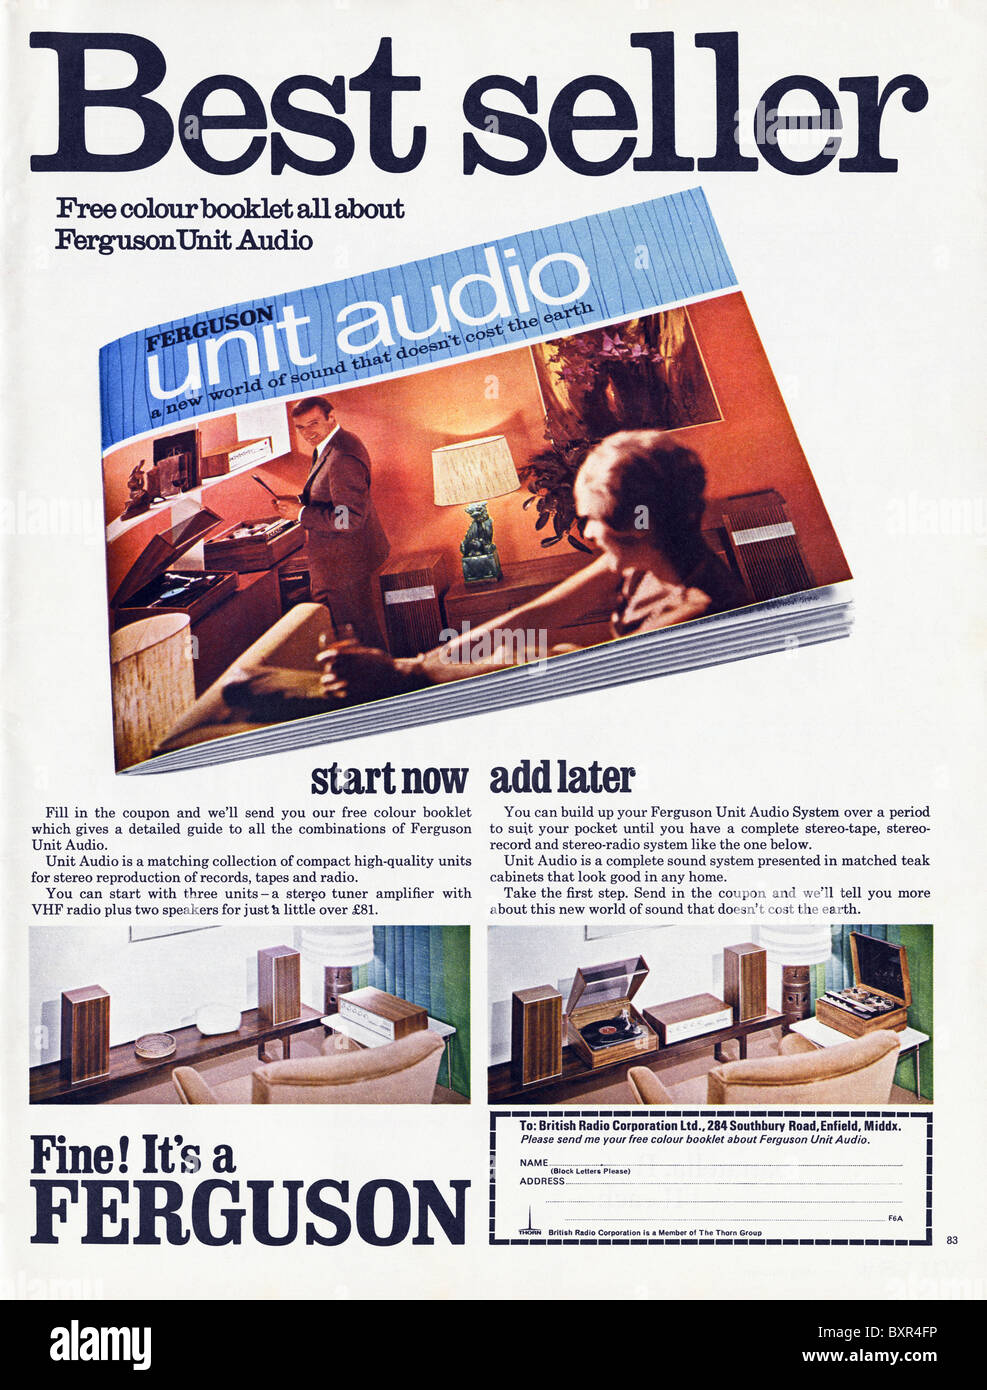 Ferguson HiFi audio full page advertisement in magazine colour supplement  circa 1969 Stock Photo - Alamy